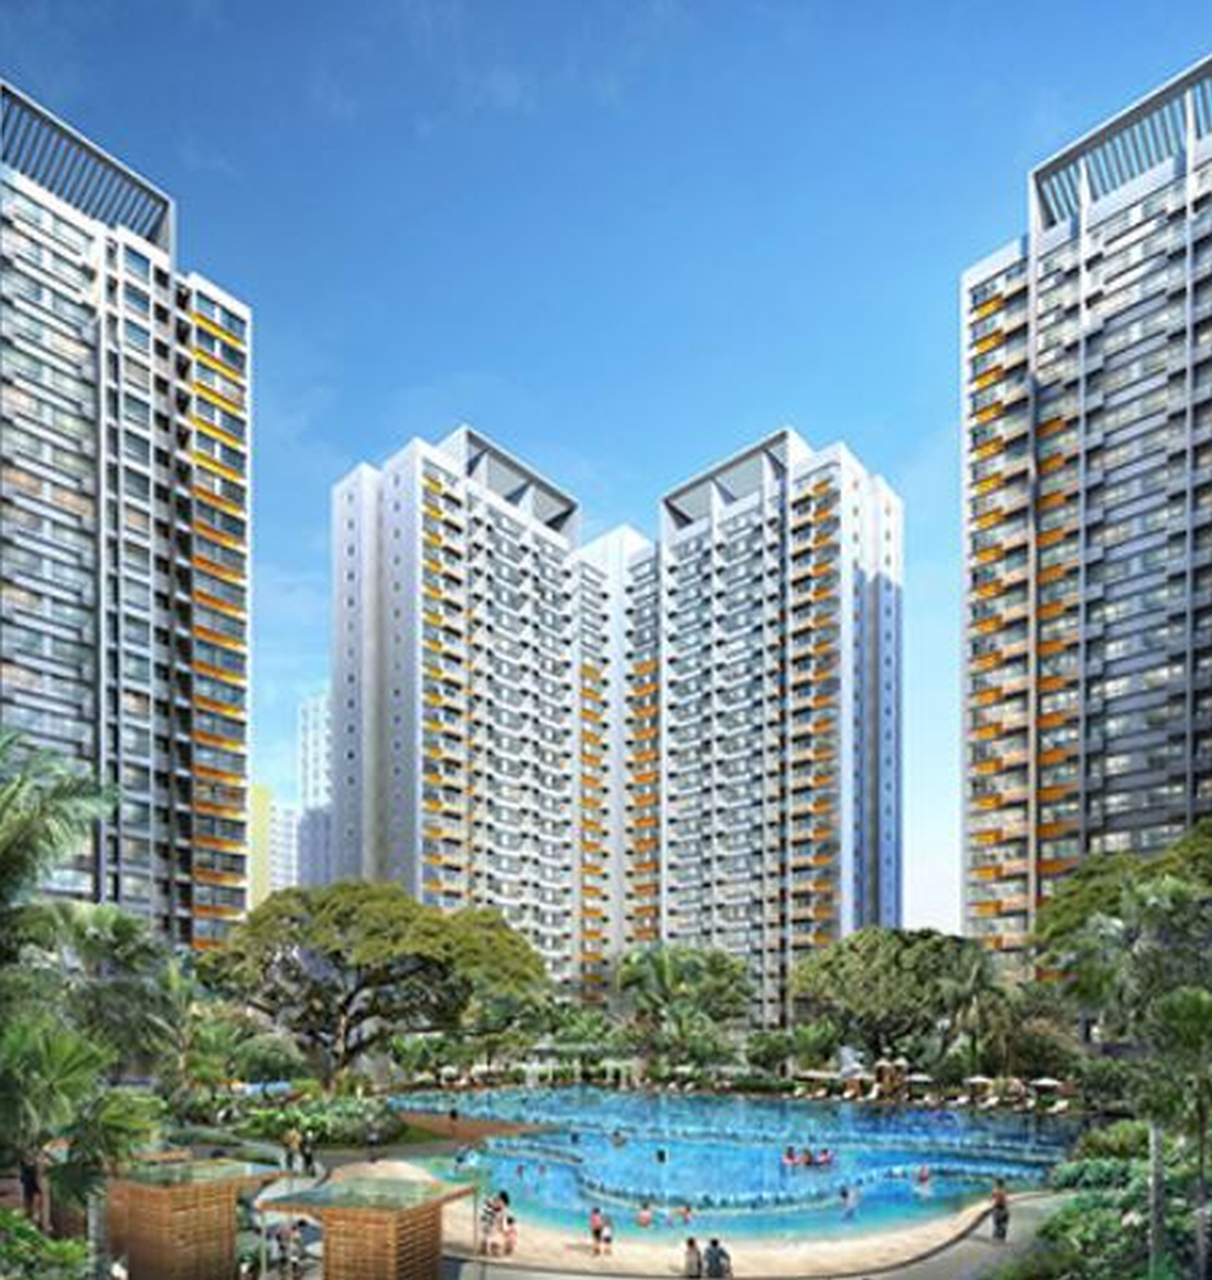 2Bedrooms Apartment Springlake SMB city light view, Bekasi